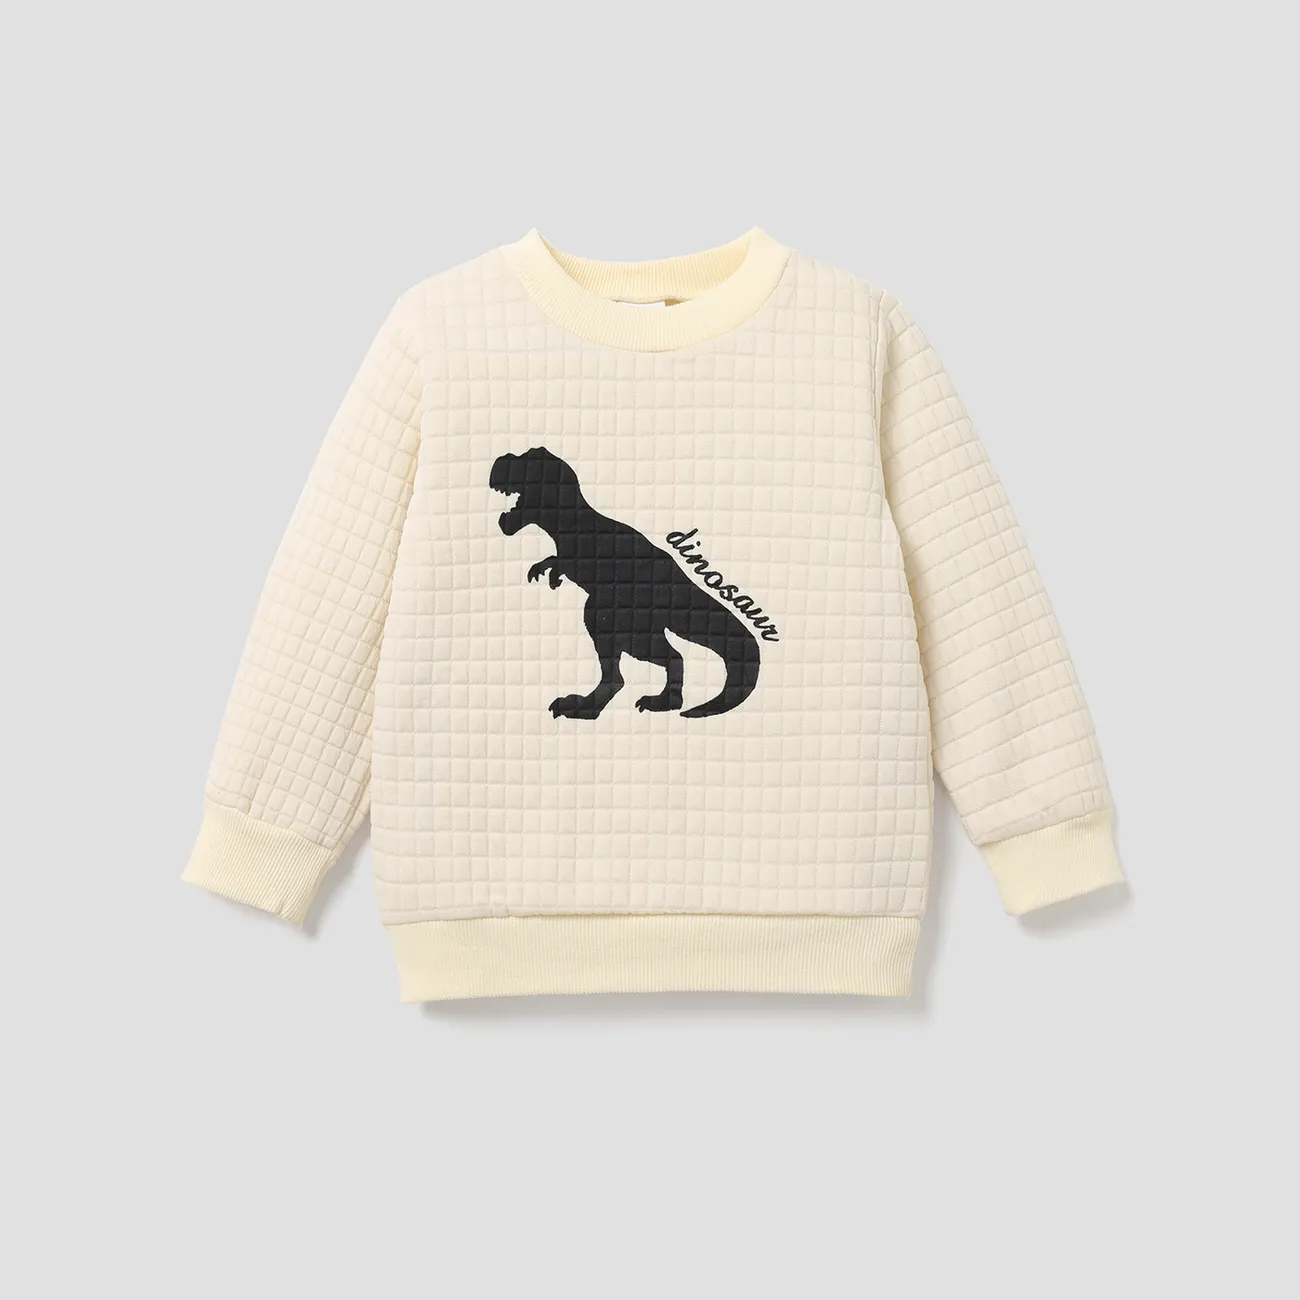 Toddler Boy Letter Dinosaur Print Textured Pullover Sweatshirt  big image 1